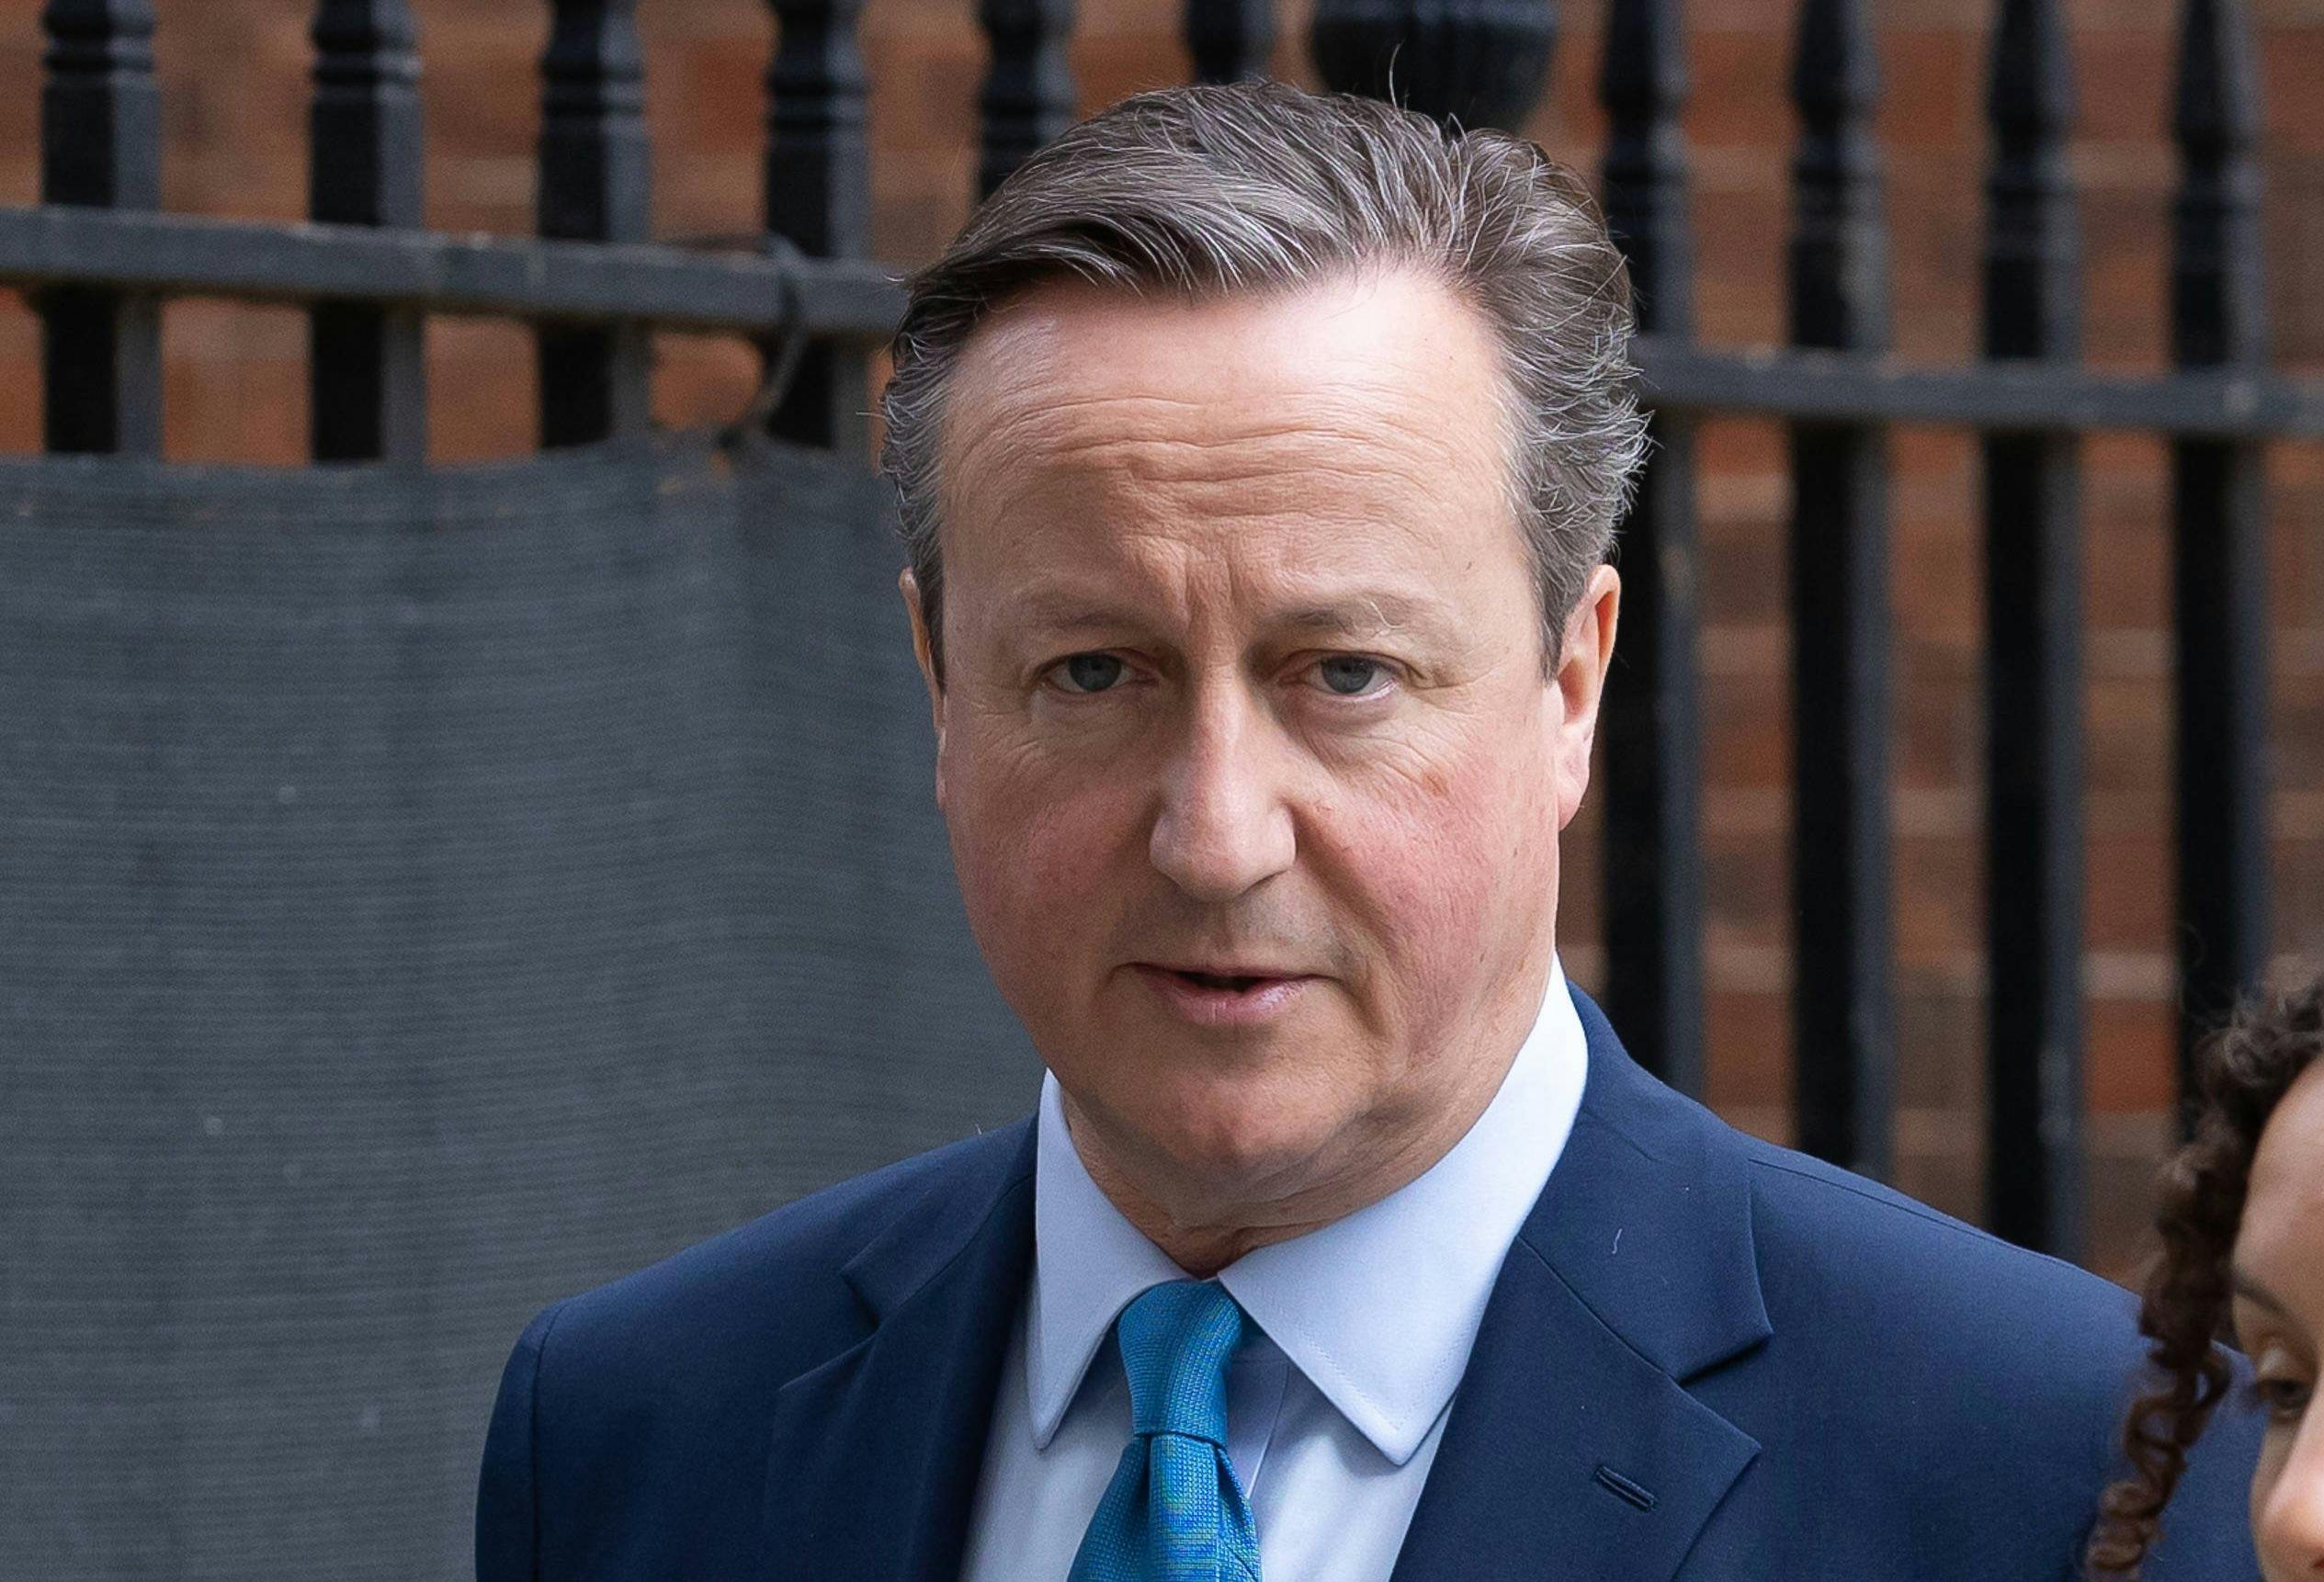 China Politik, China Wirtschaft, China UK, China GB. Großbritannien, Anti-China: Lord David Cameron beim Verlassen einer Kabinettssitzung 